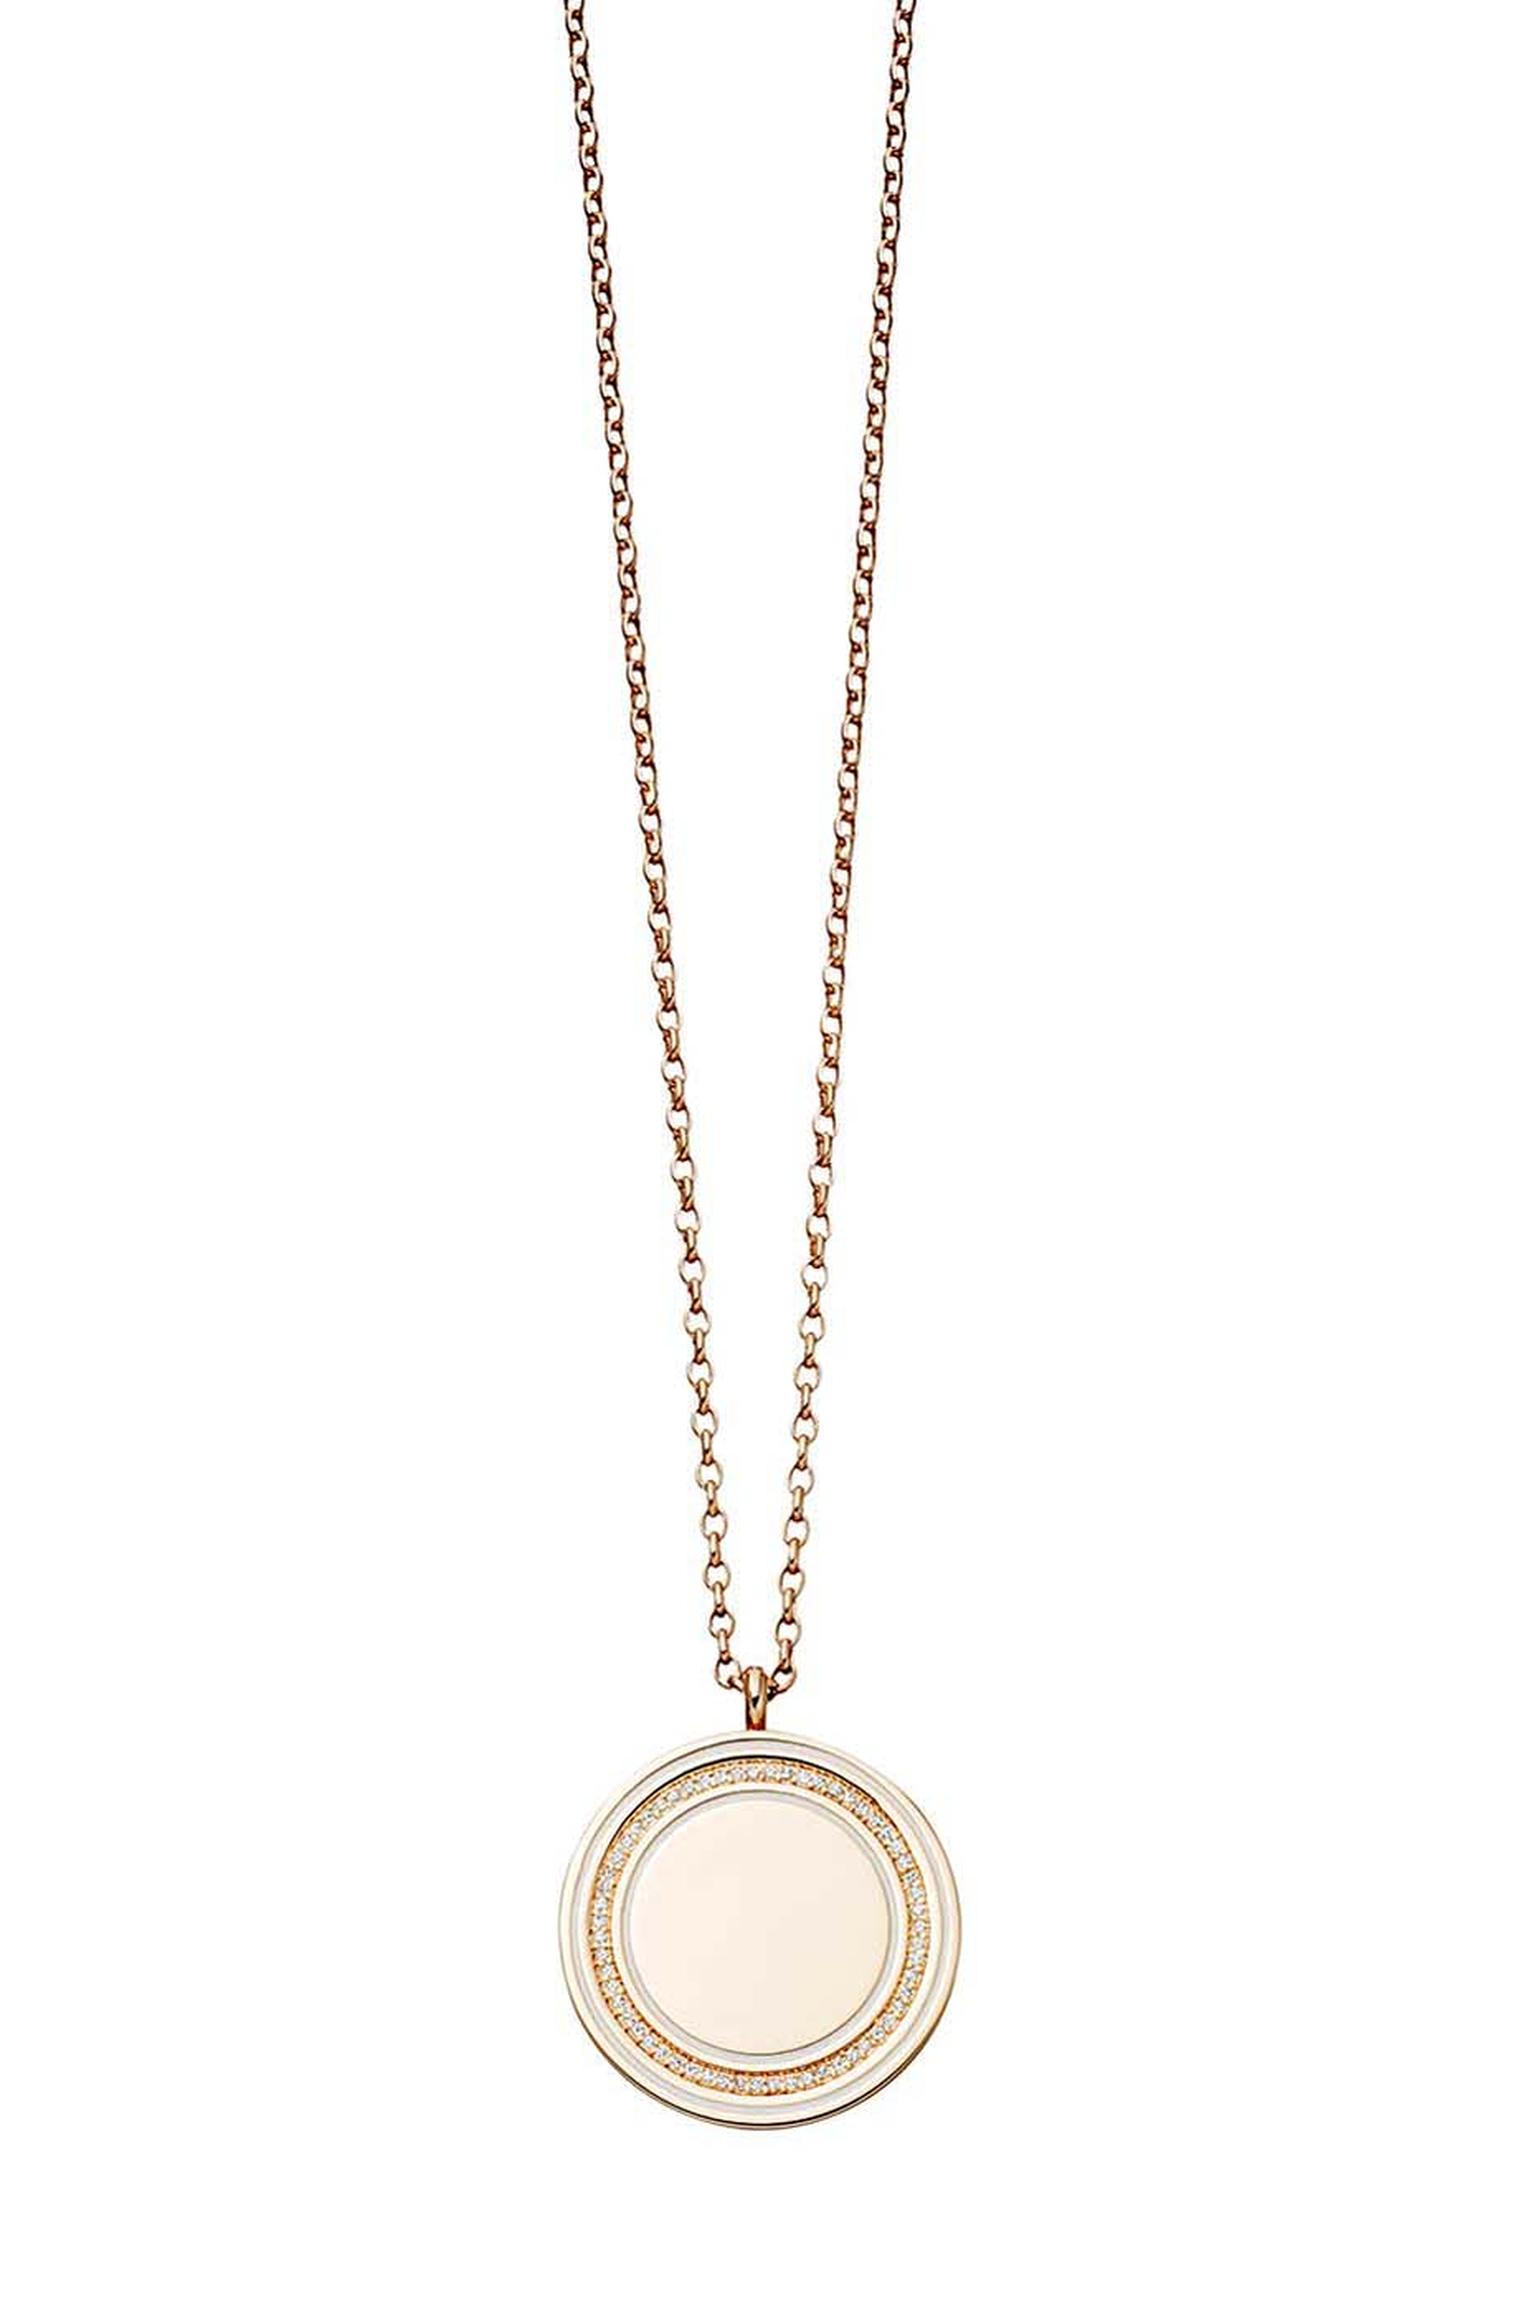 Astley Clarke Moonlight Cosmos locket in rose gold with diamond pavé.